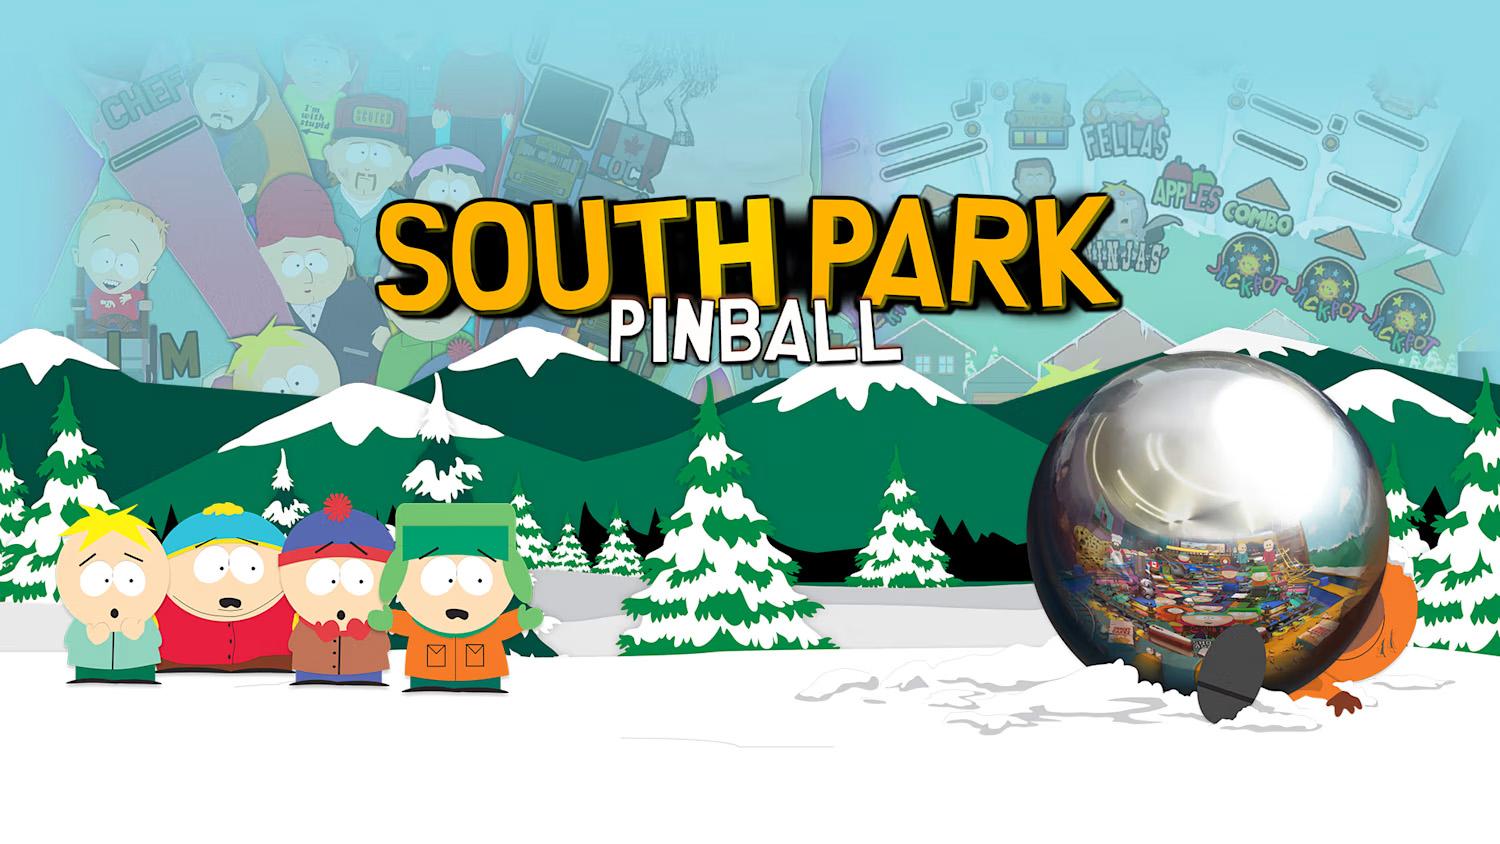 Nintendo Switch Pinball FX South Park Pinball for $4.99